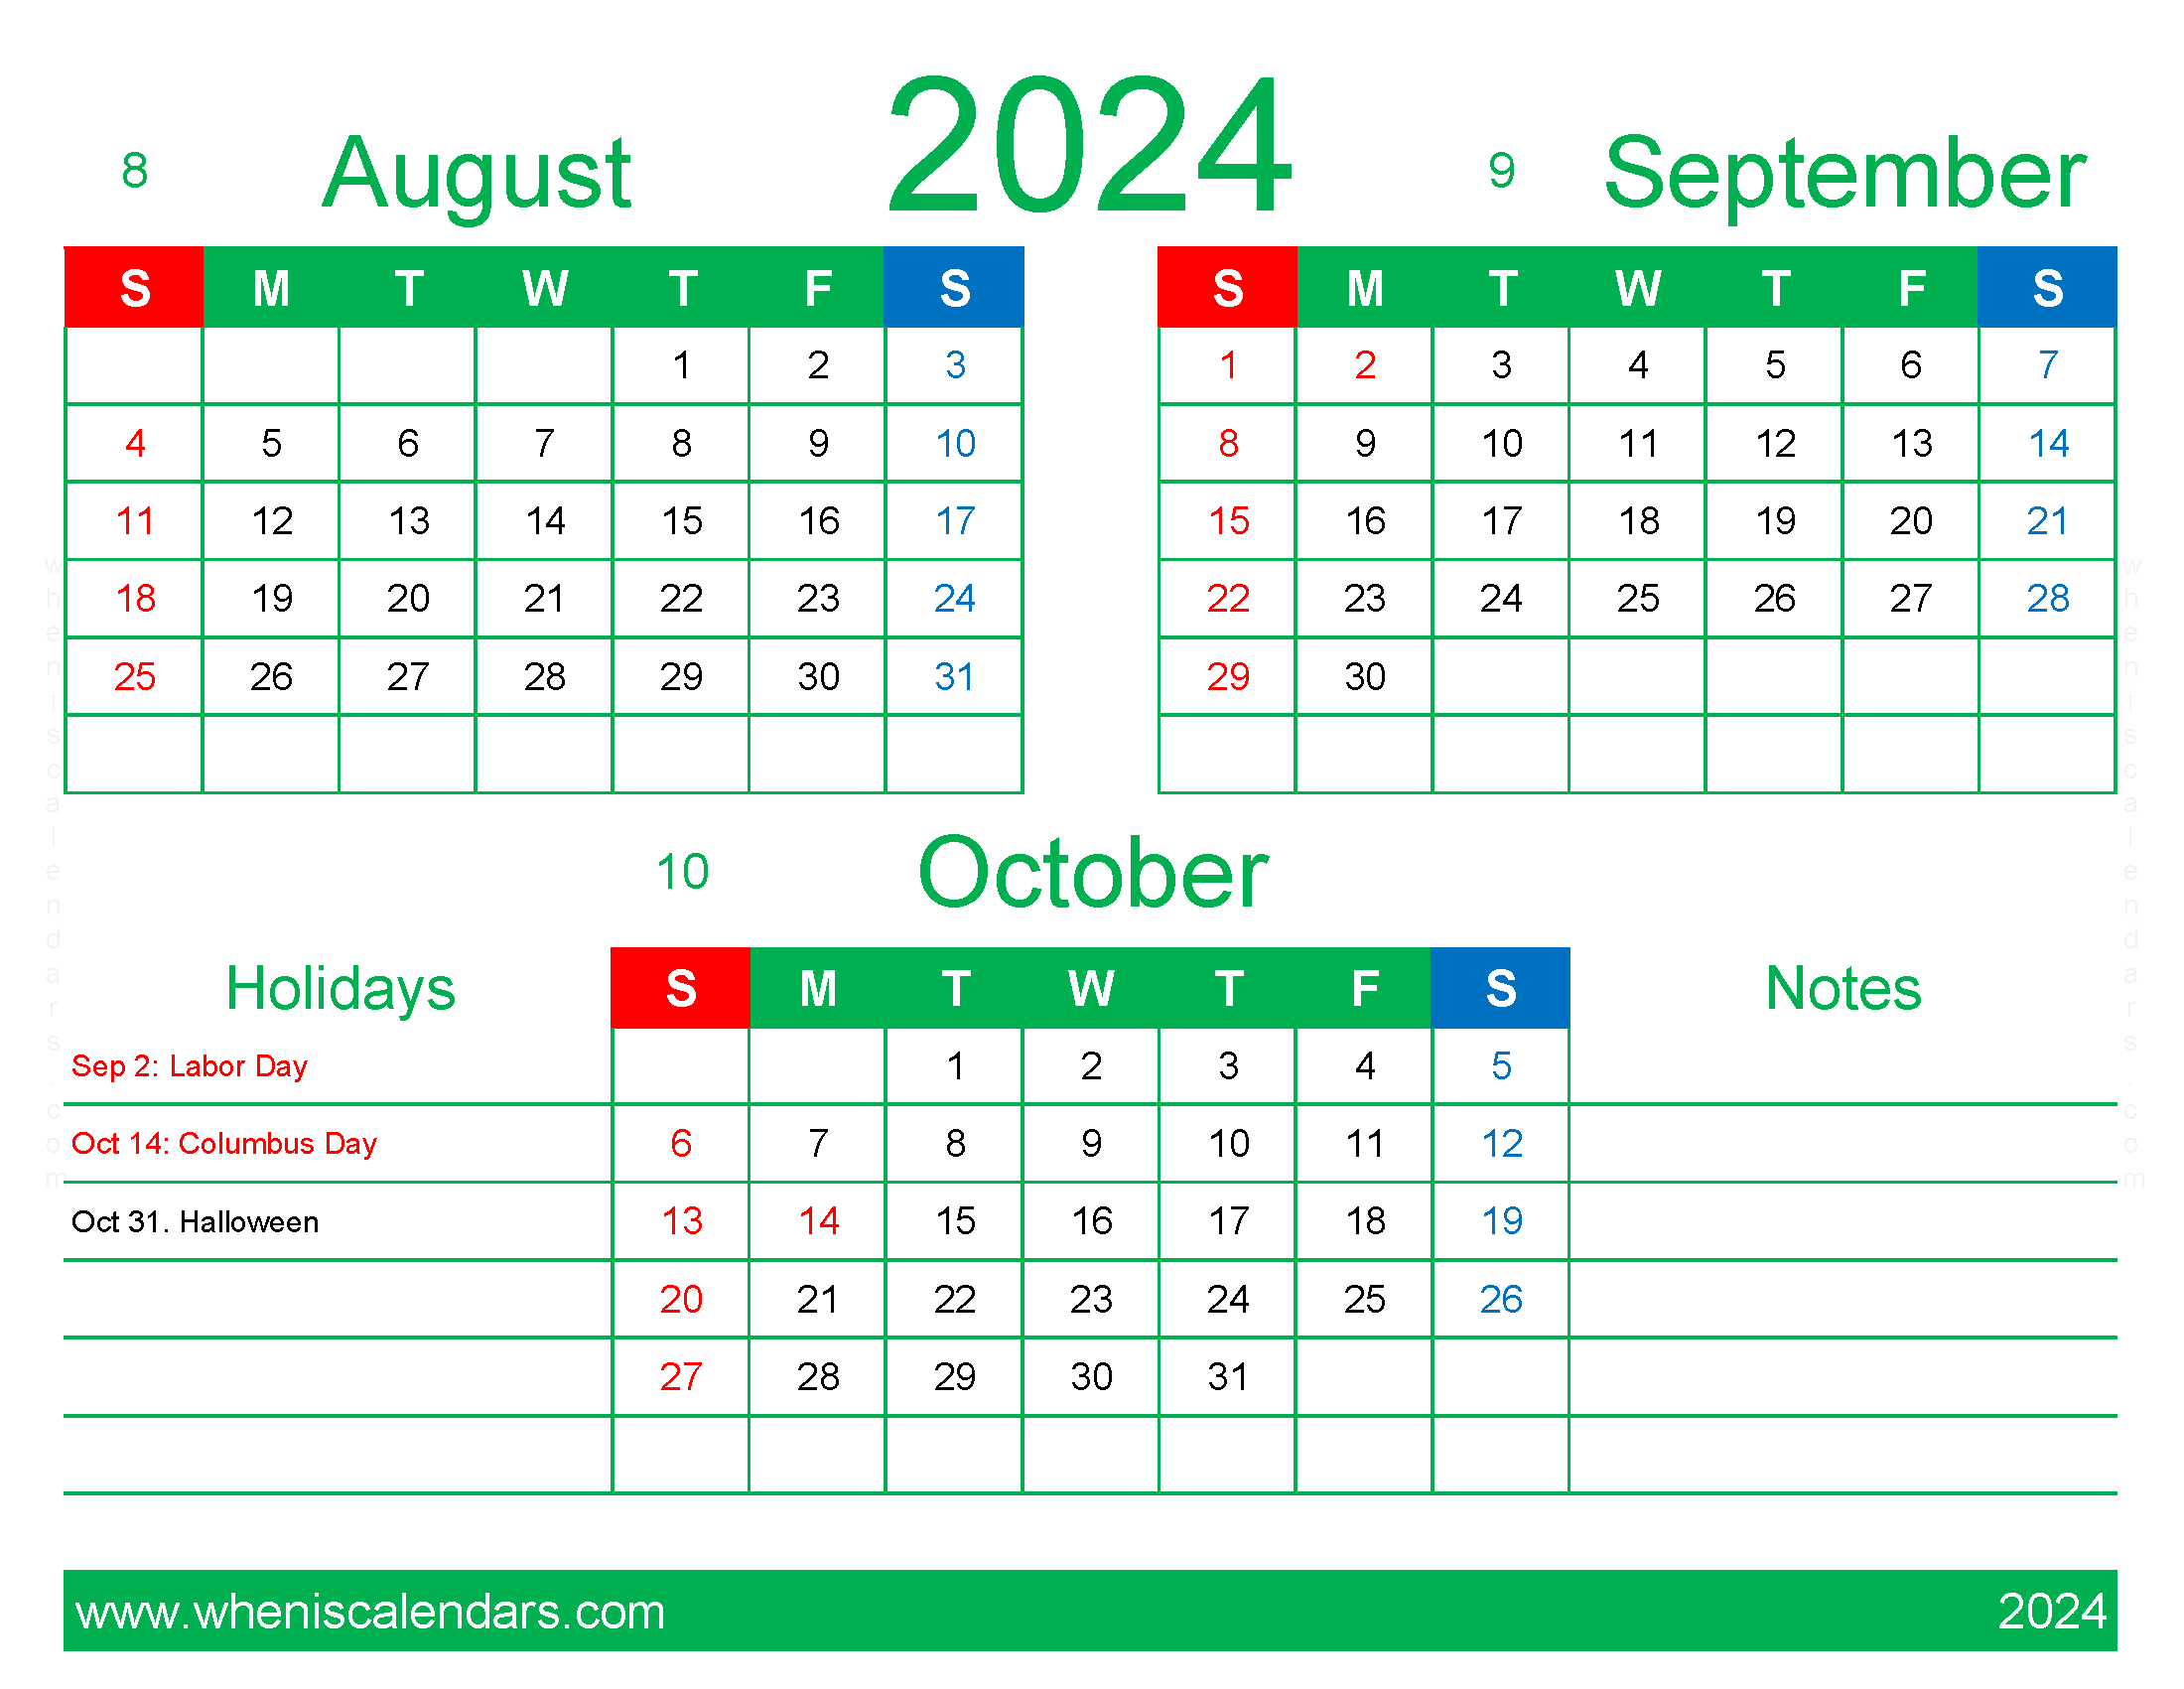 Download 2024 August September October Calendar free ASO409